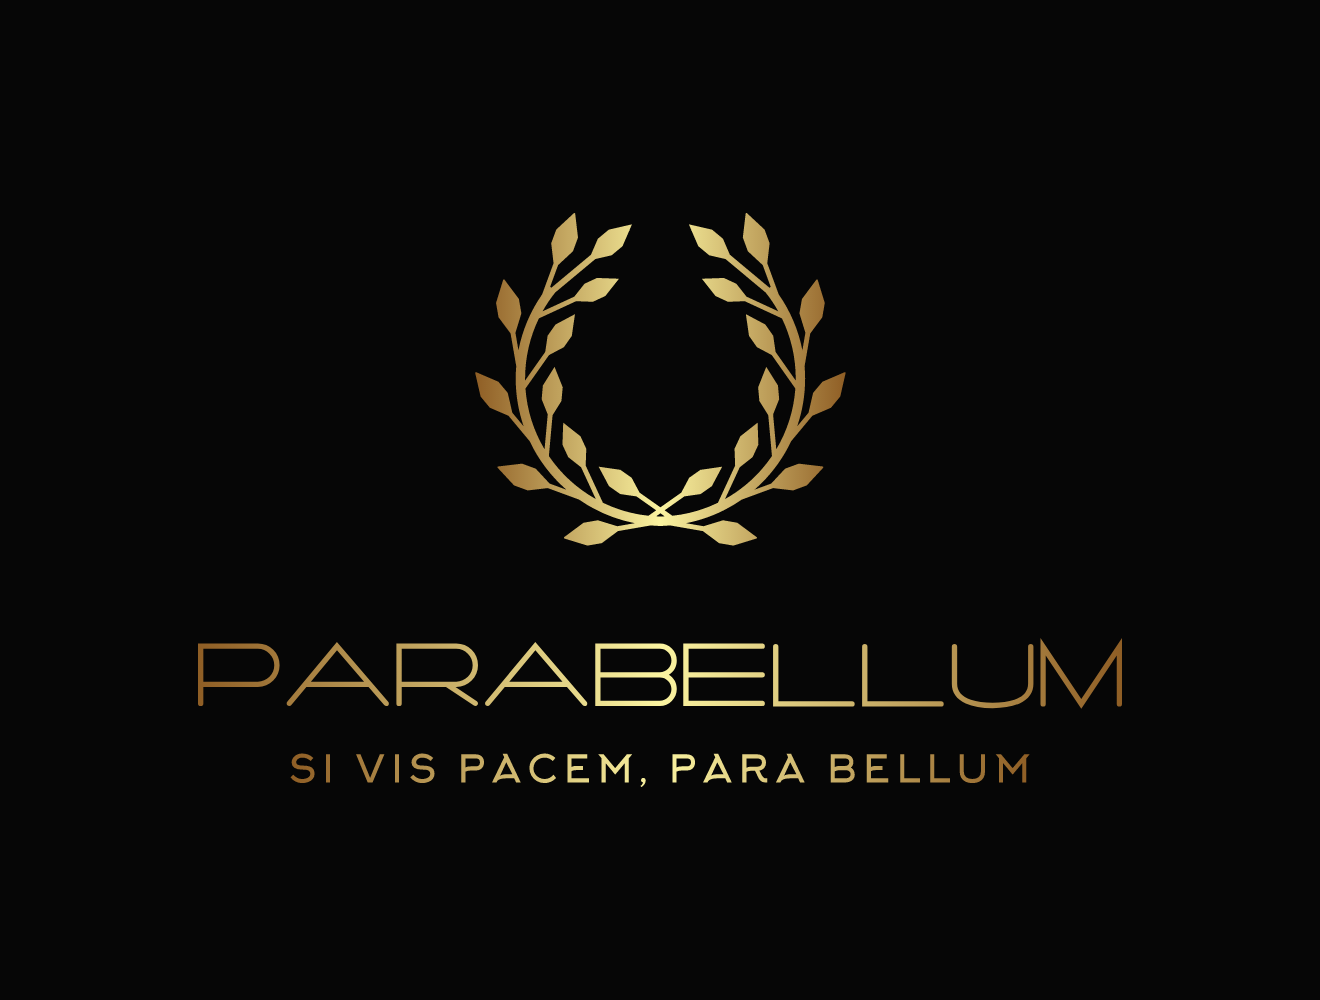 Parabellum Weaponry LLC